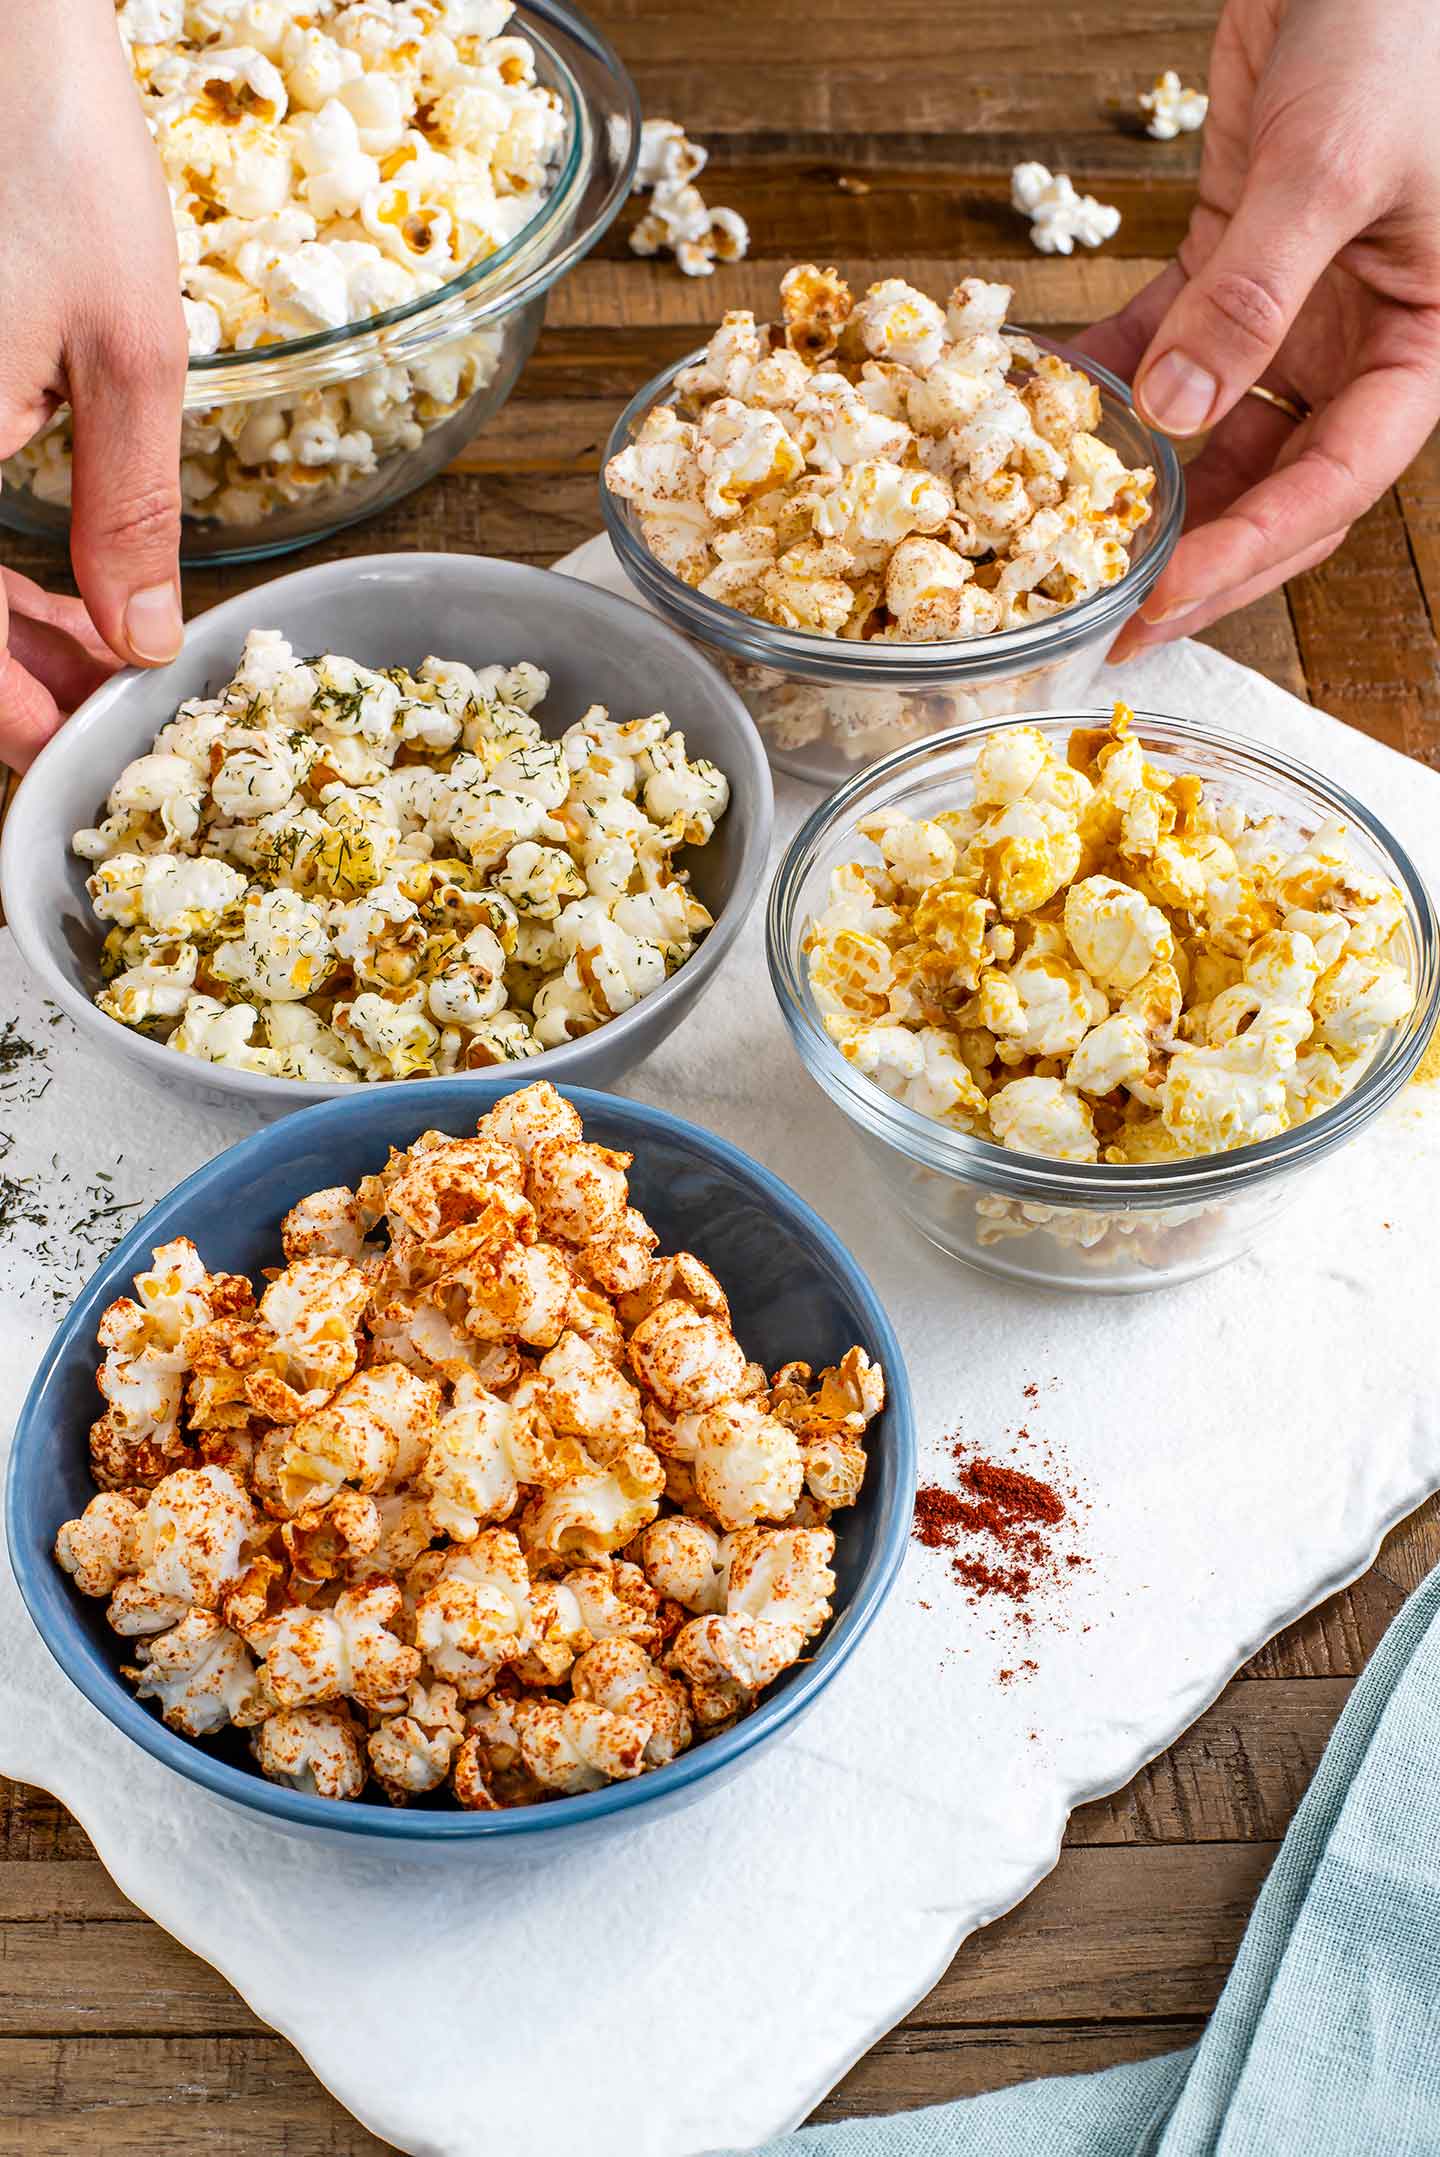 https://tastythriftytimely.com/wp-content/uploads/2022/03/Easy-Vegan-Popcorn-Seasoning-4-Ways-4.jpg